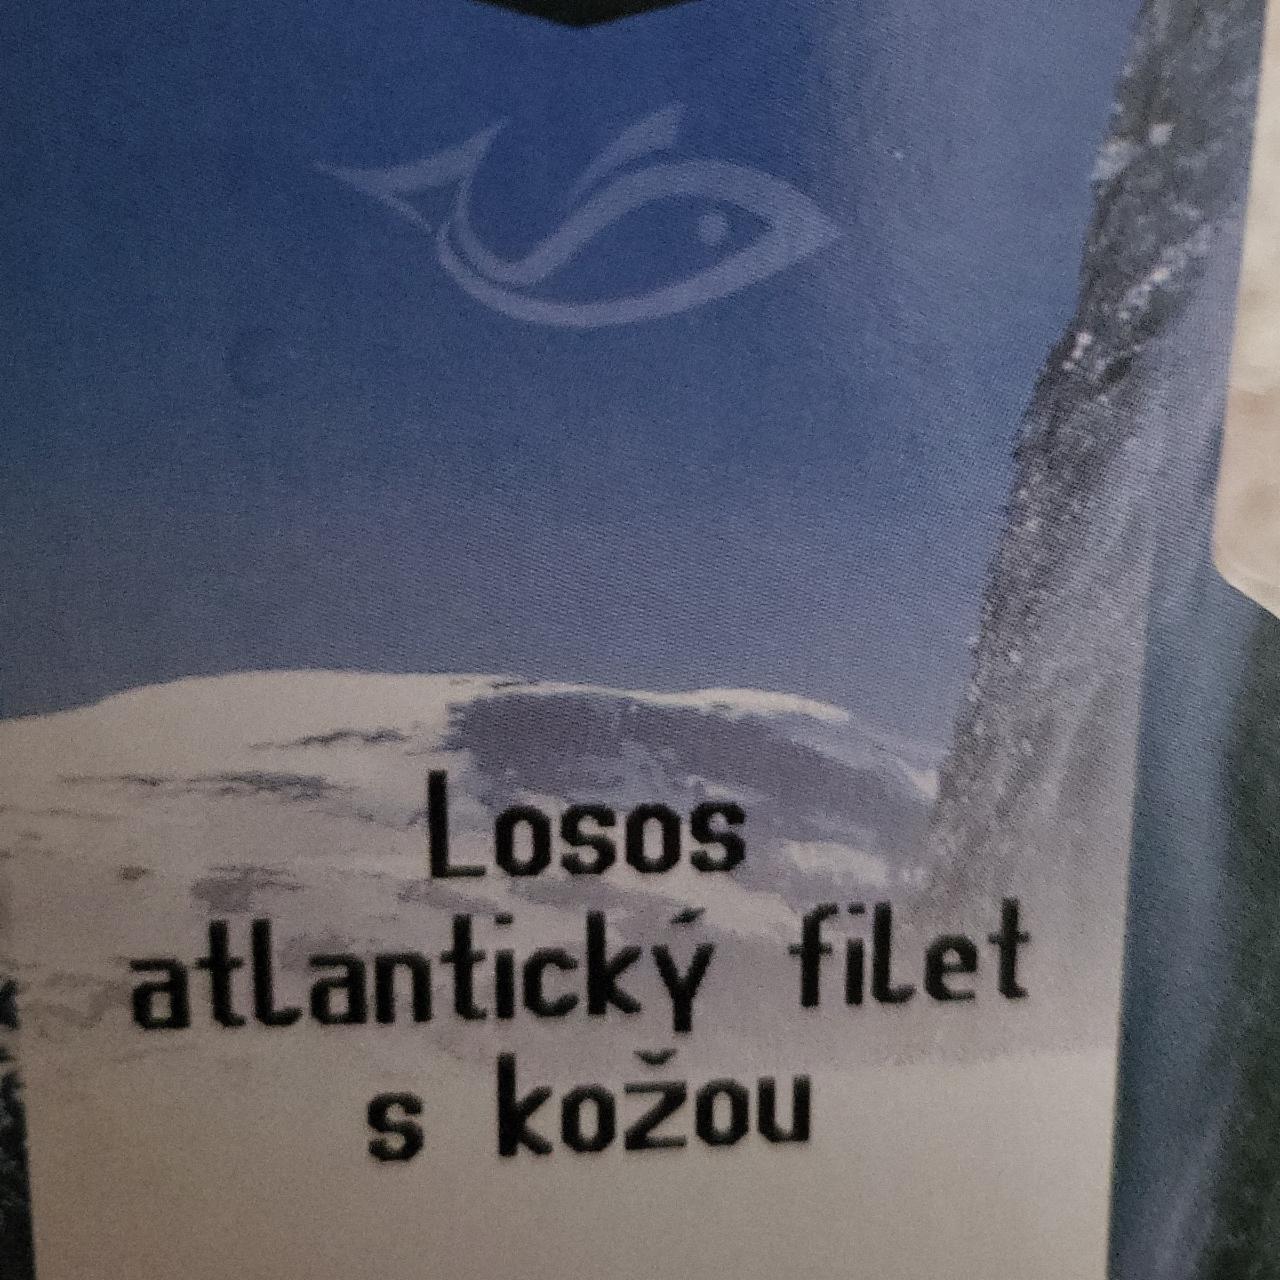 Fotografie - Losos atlanticky filet s kozou